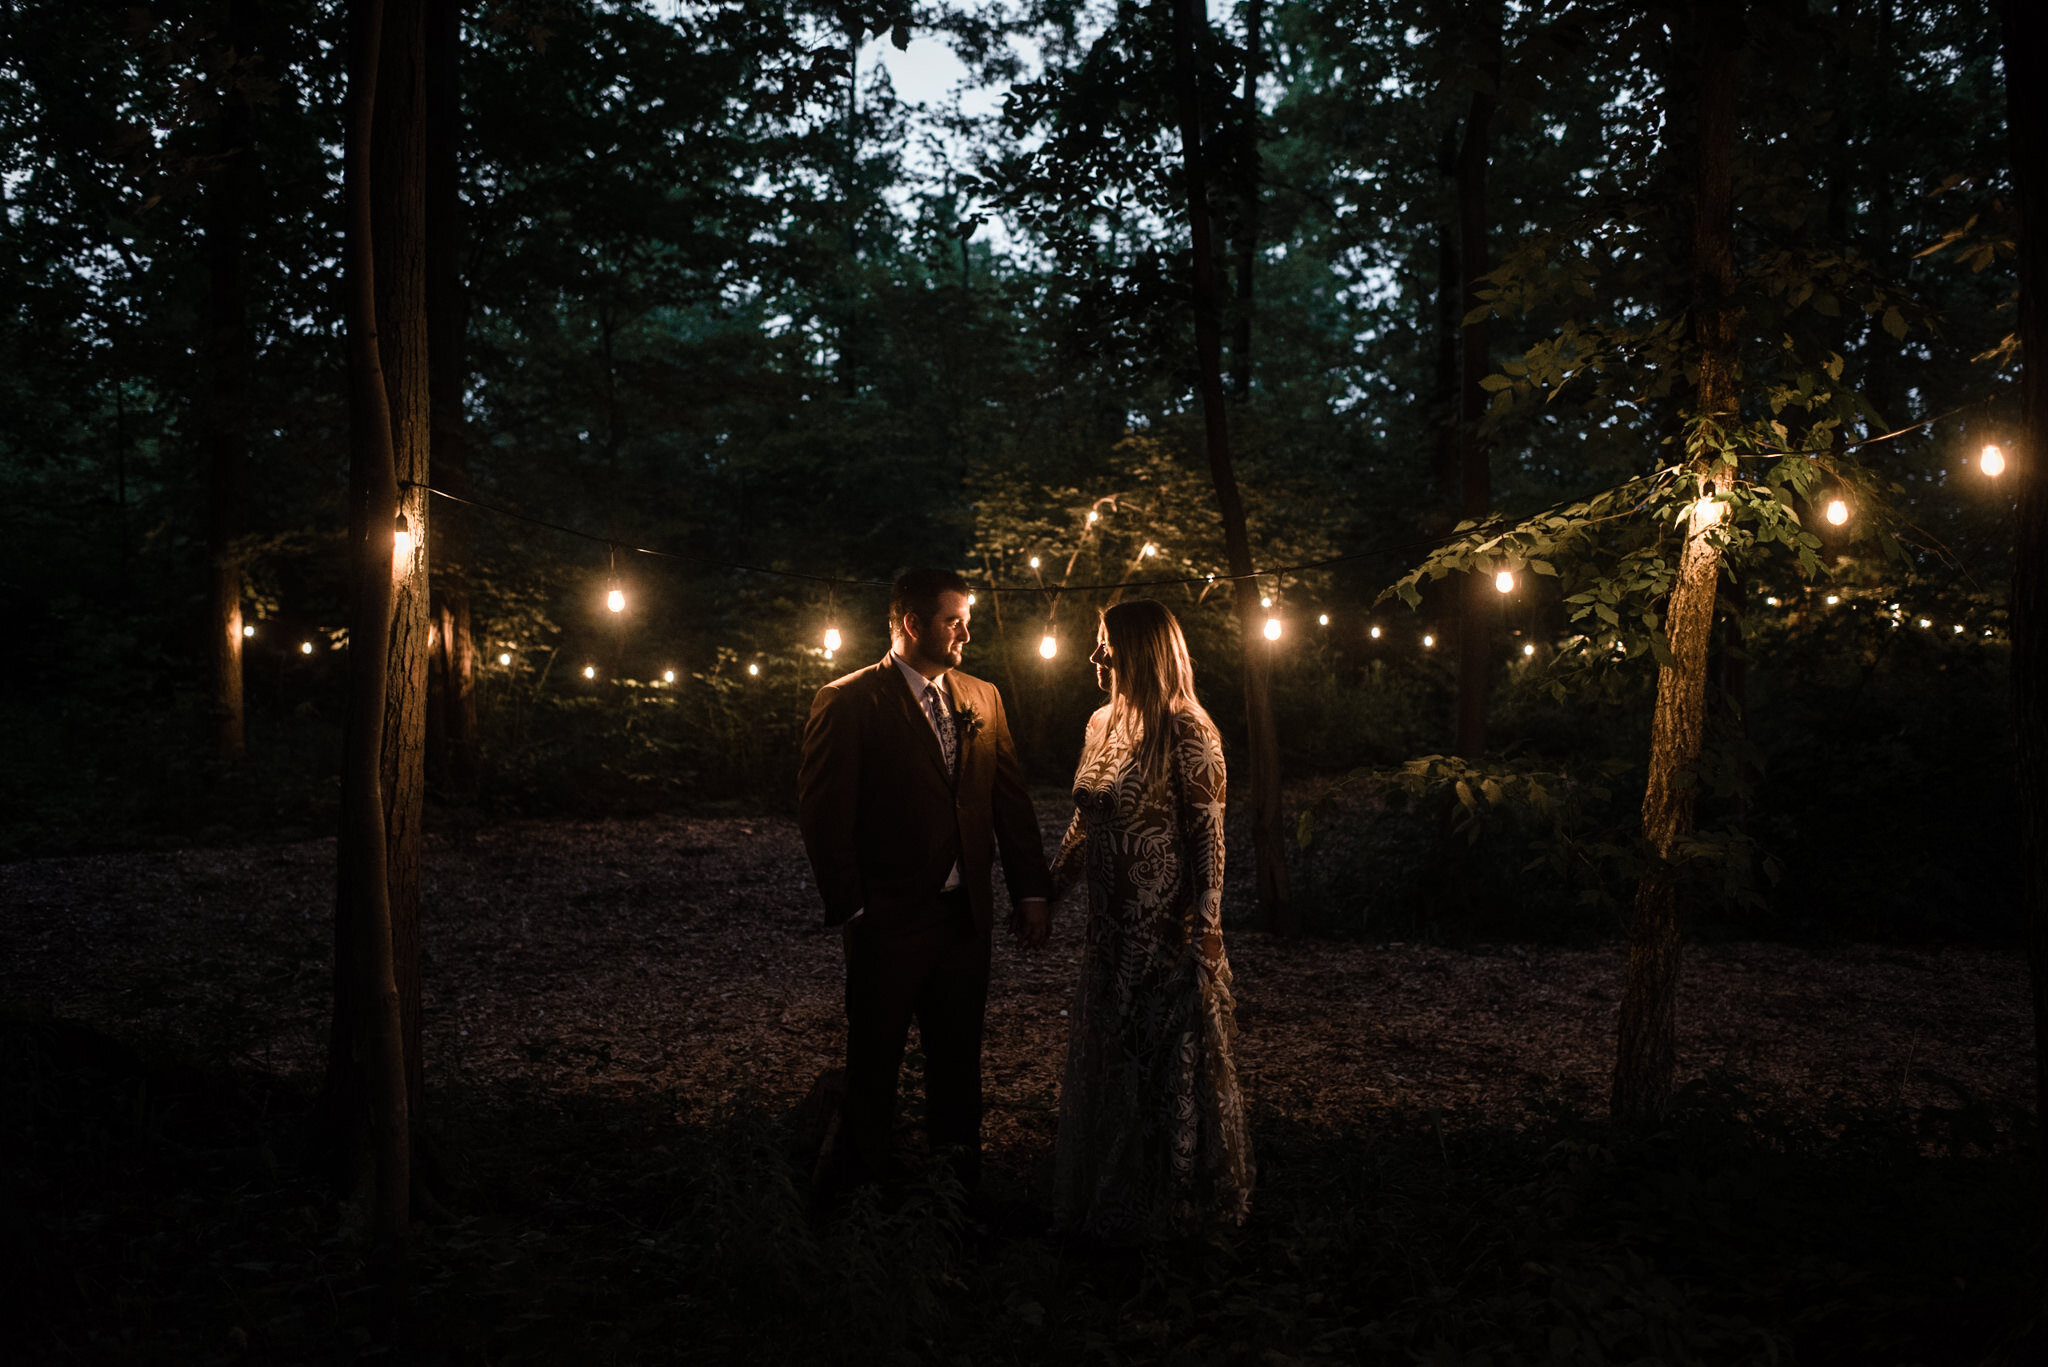 044-string-lights-wedding-photos-couple-bride-groom-forest-outdoor-boho-ceremony.jpg